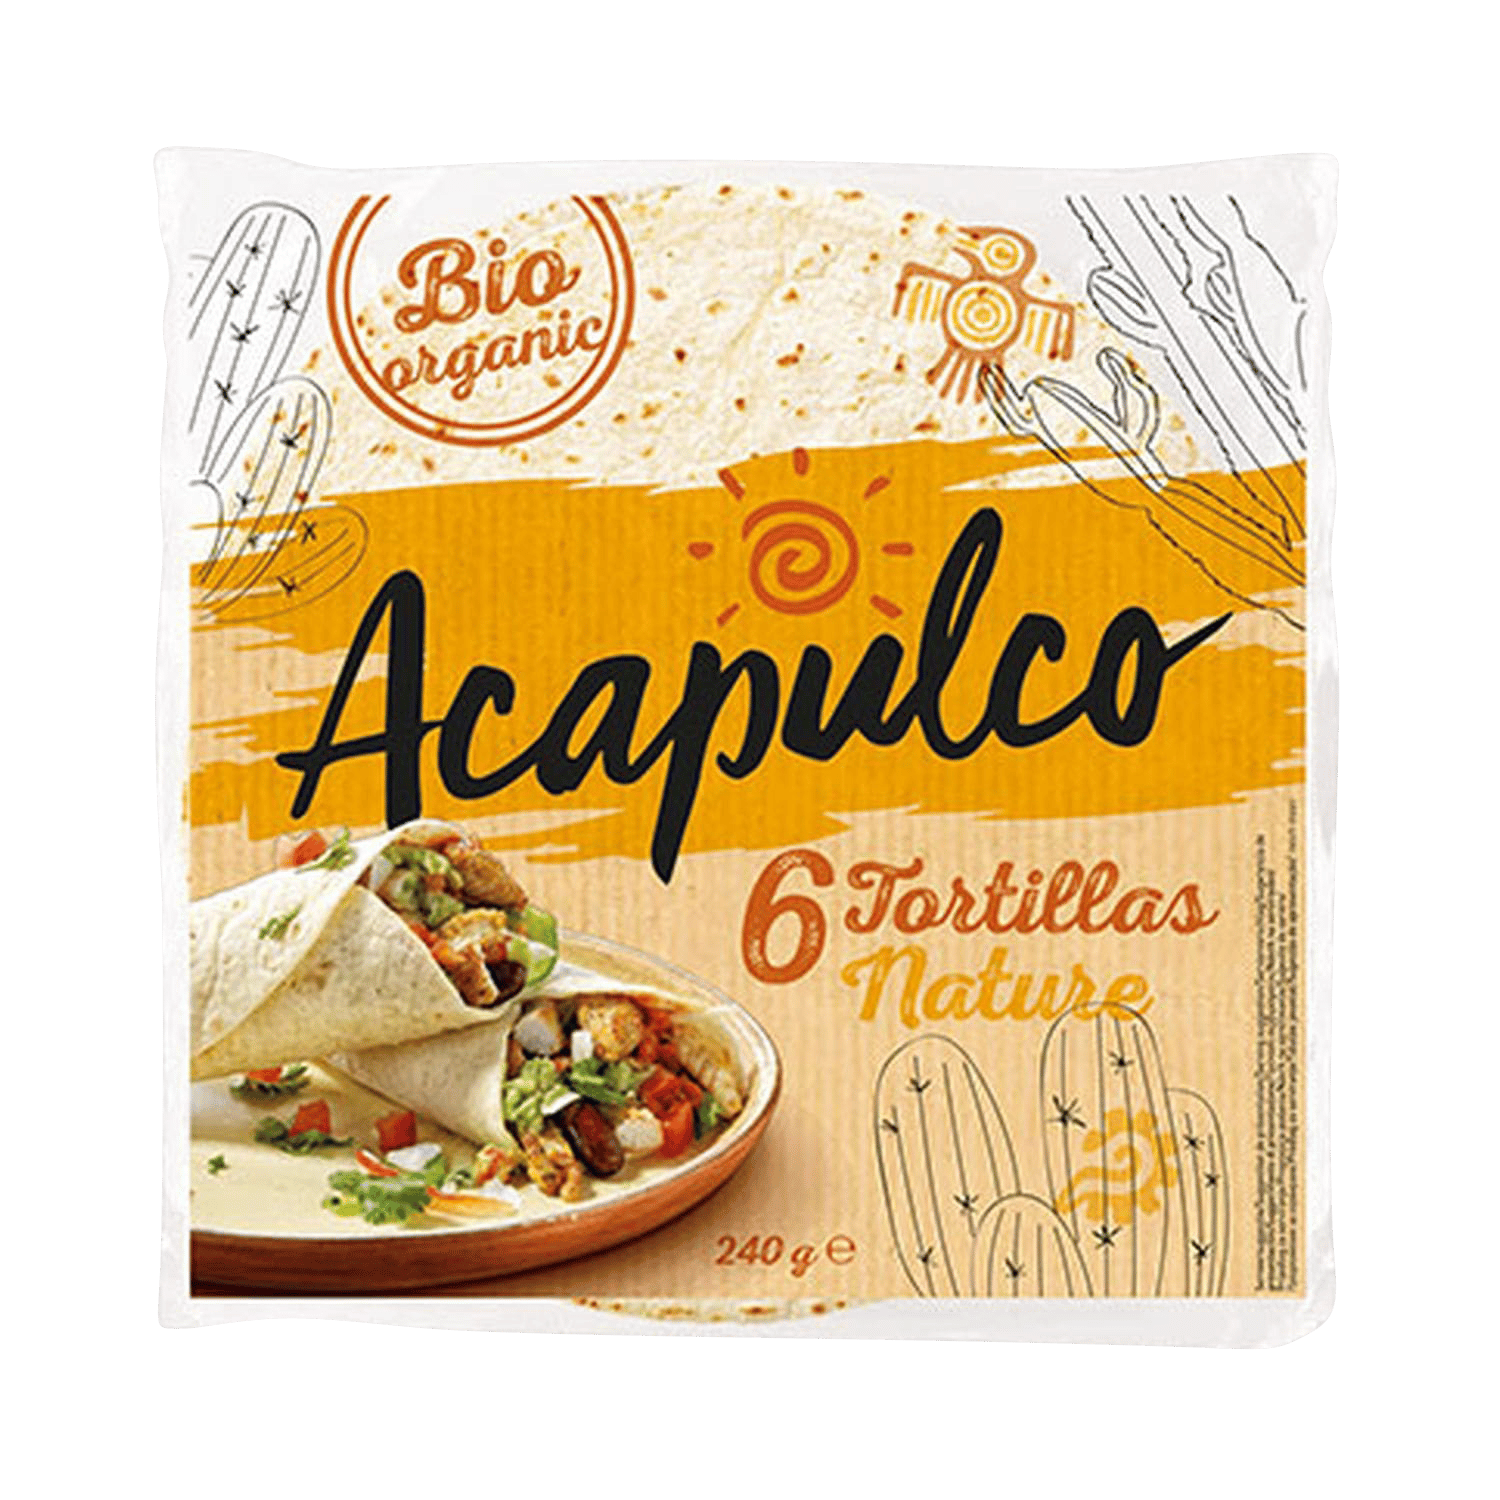 Tortillas Wraps (6 Wraps), Organic, 240g